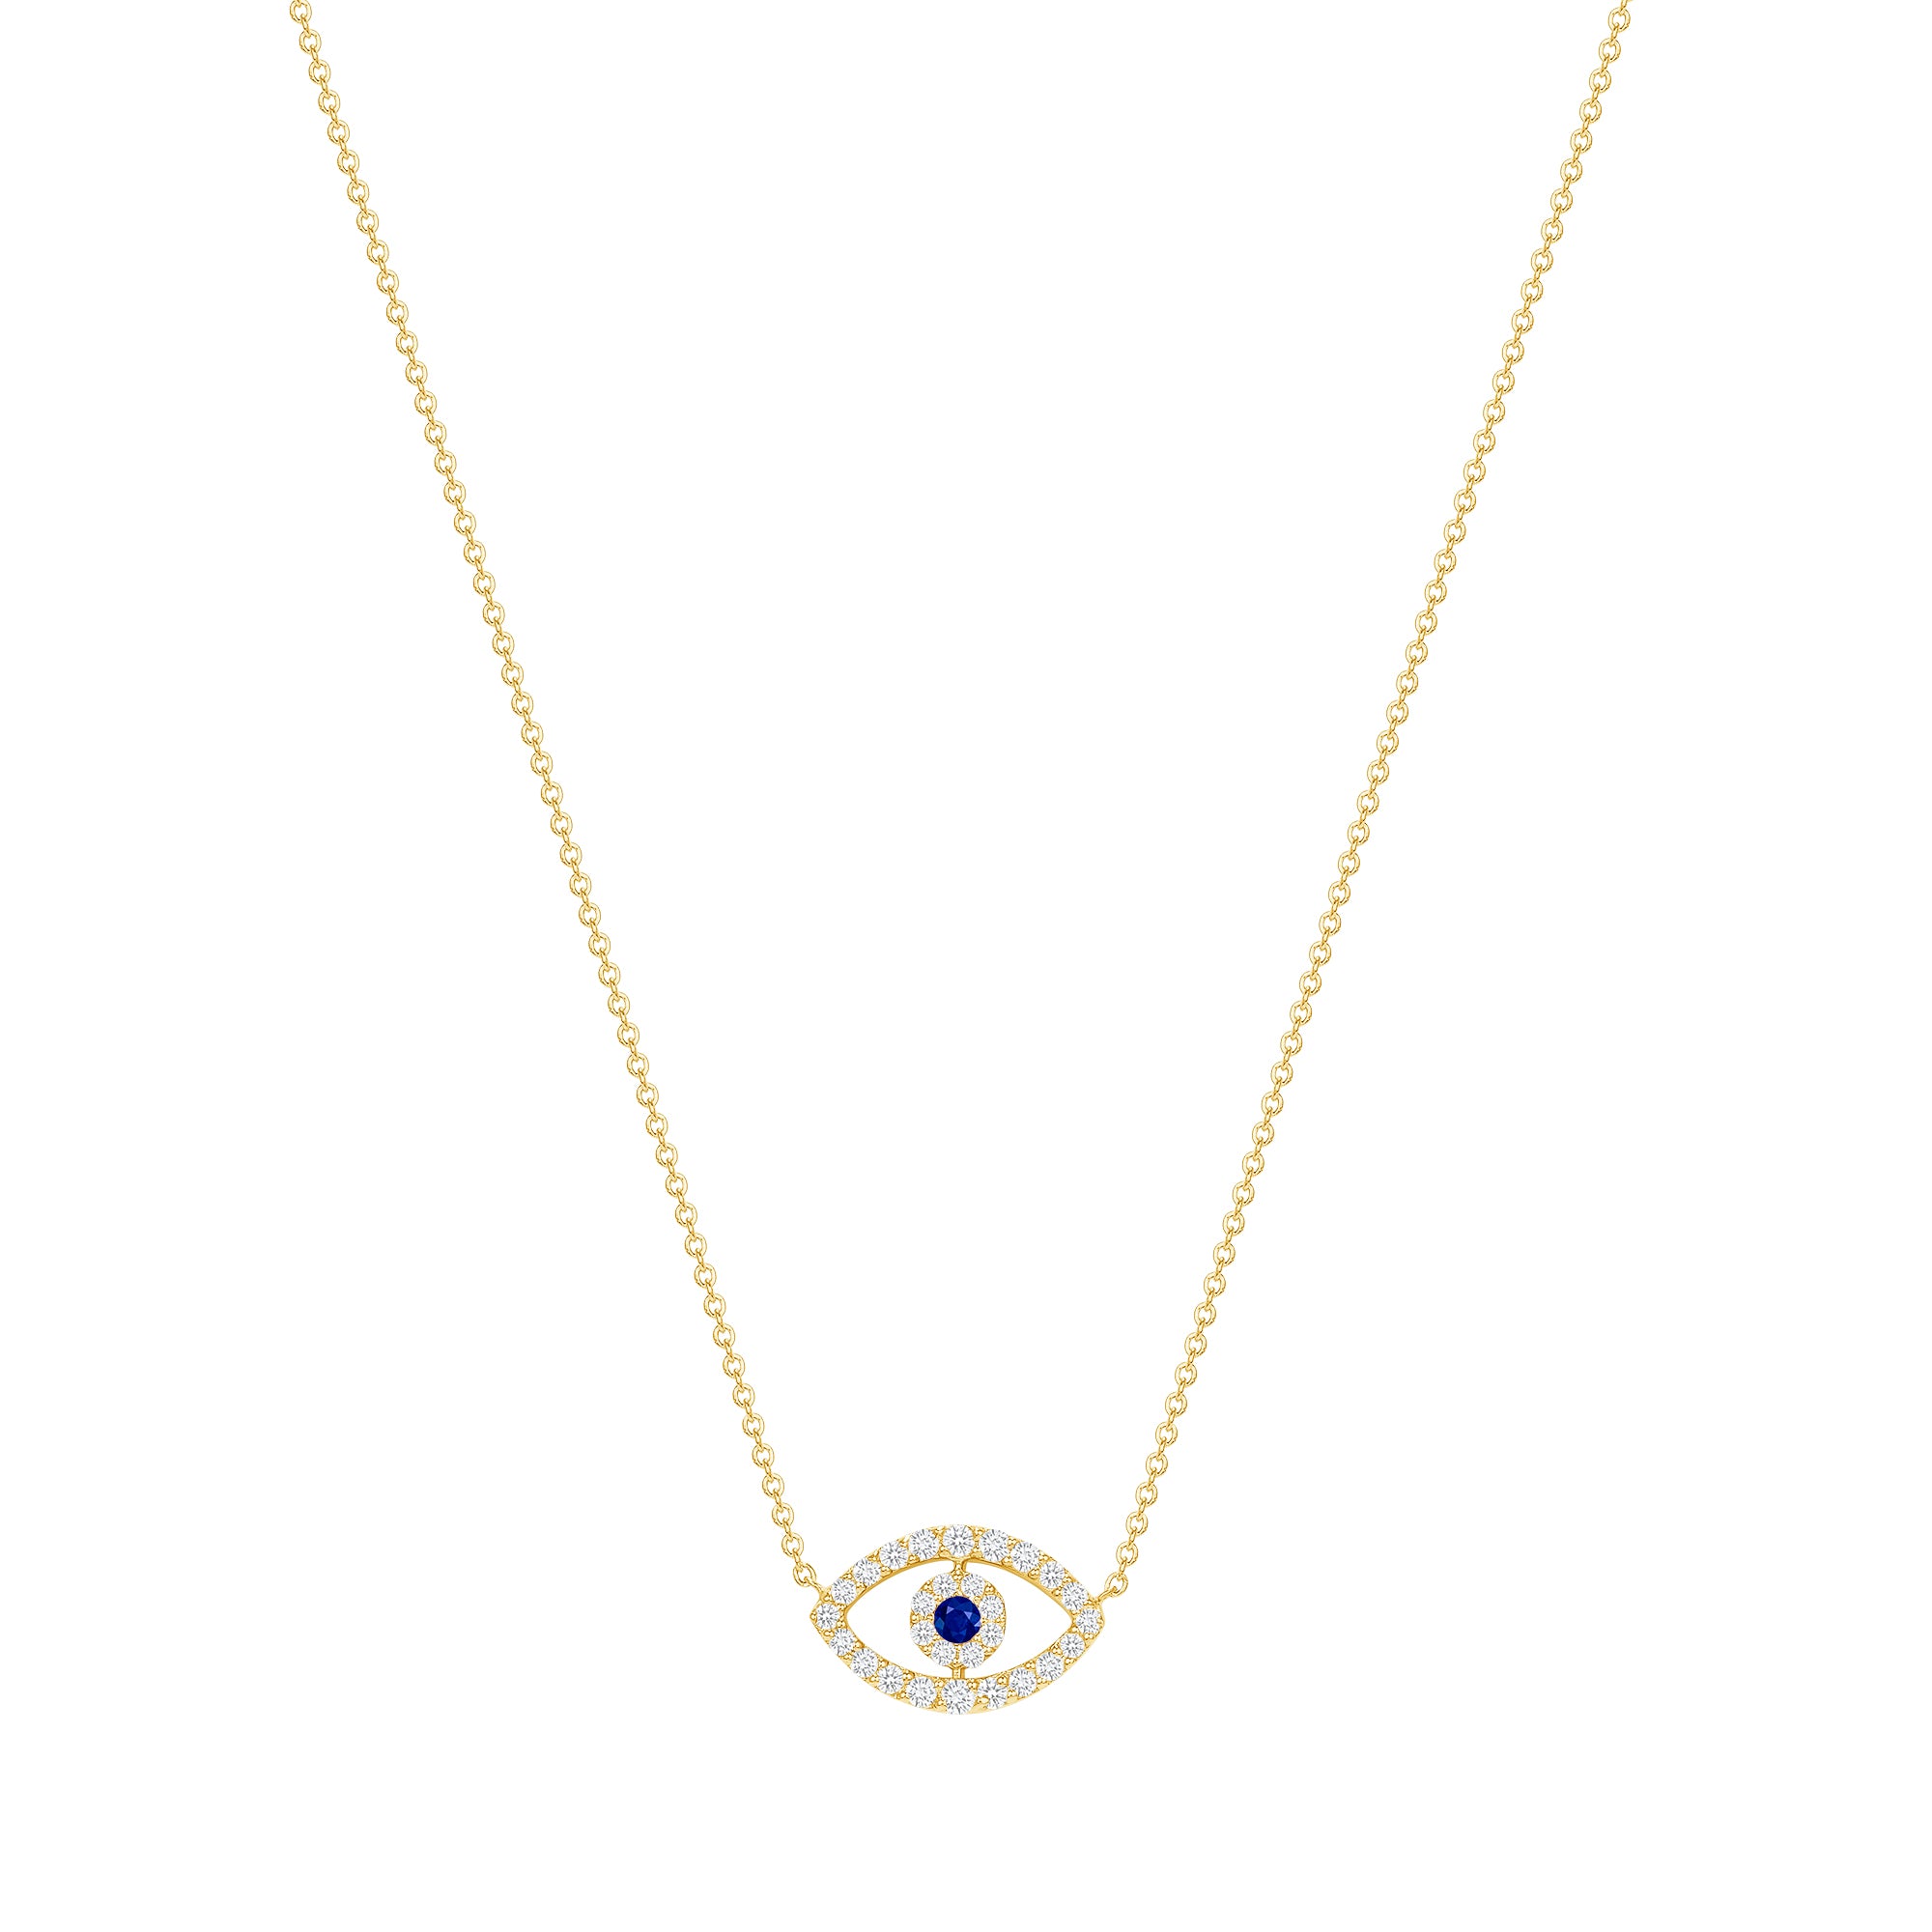 14k gold diamond evil eye necklace with blue sapphire vardui kara